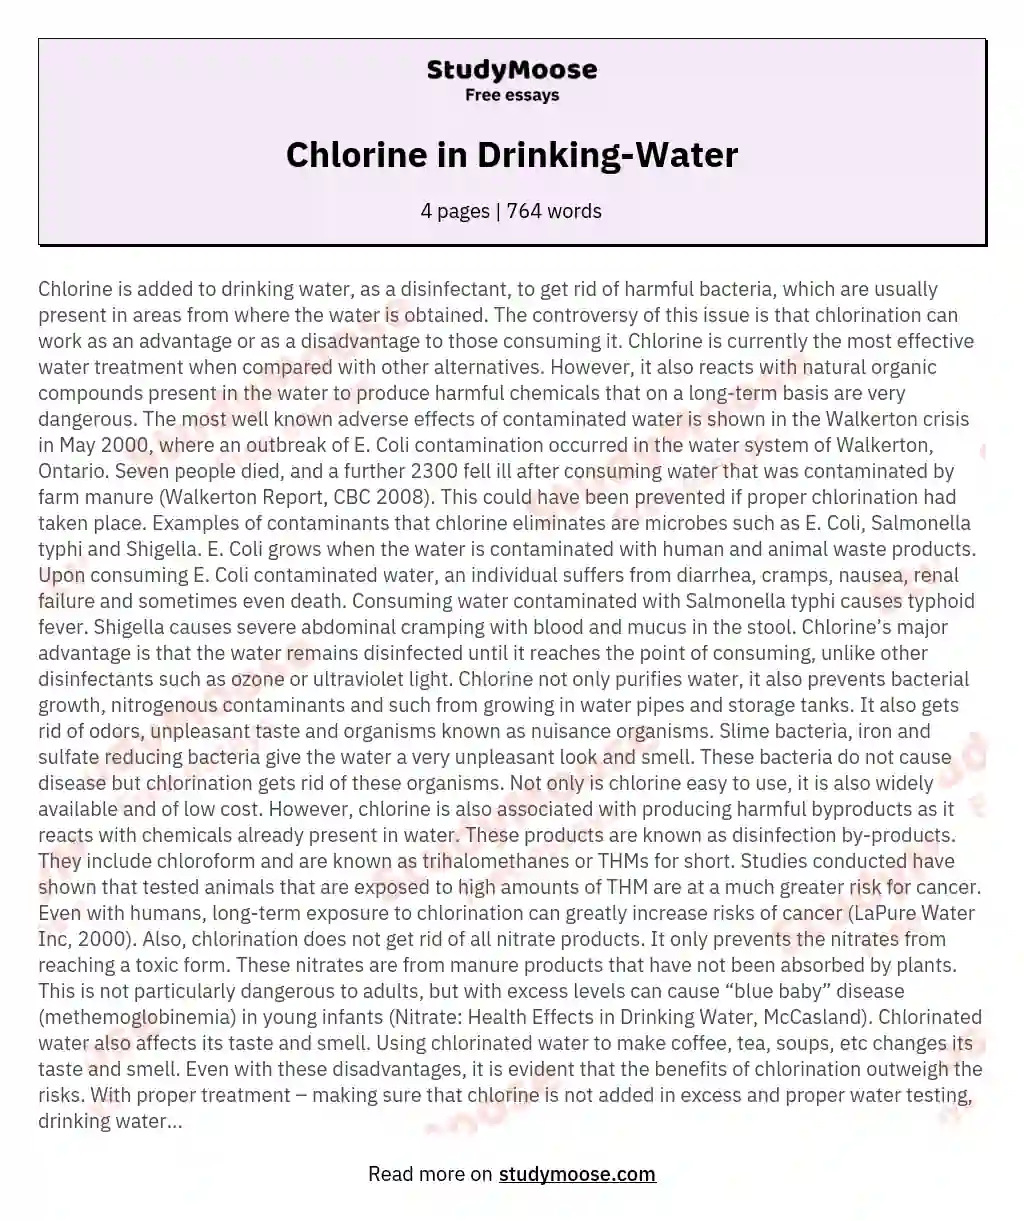 Chlorine in Drinking-Water essay